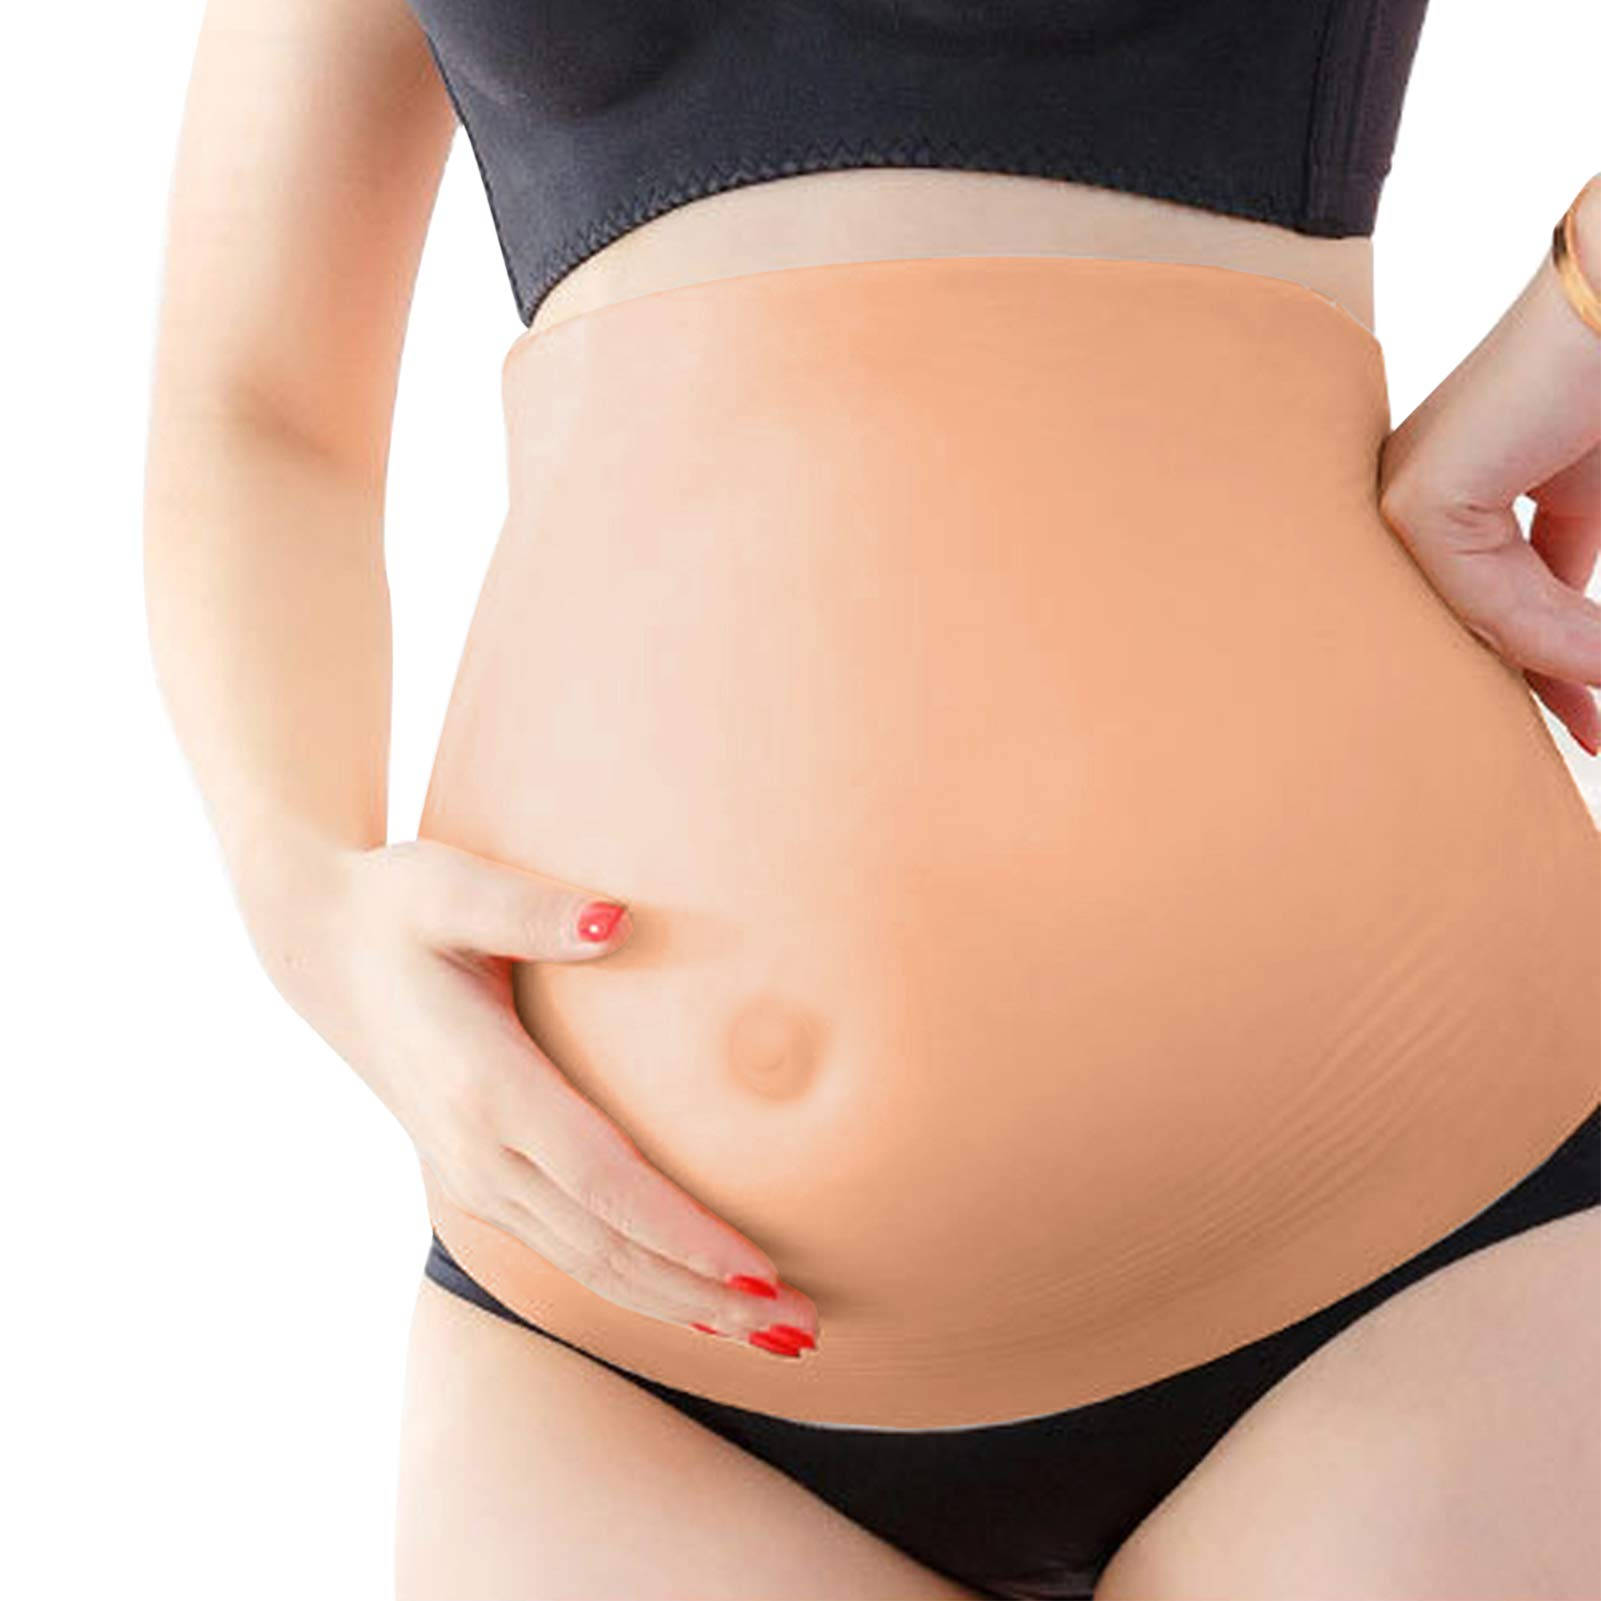 Expectant Bliss: Cherishing Every Moment of Pregnancy Wallpaper